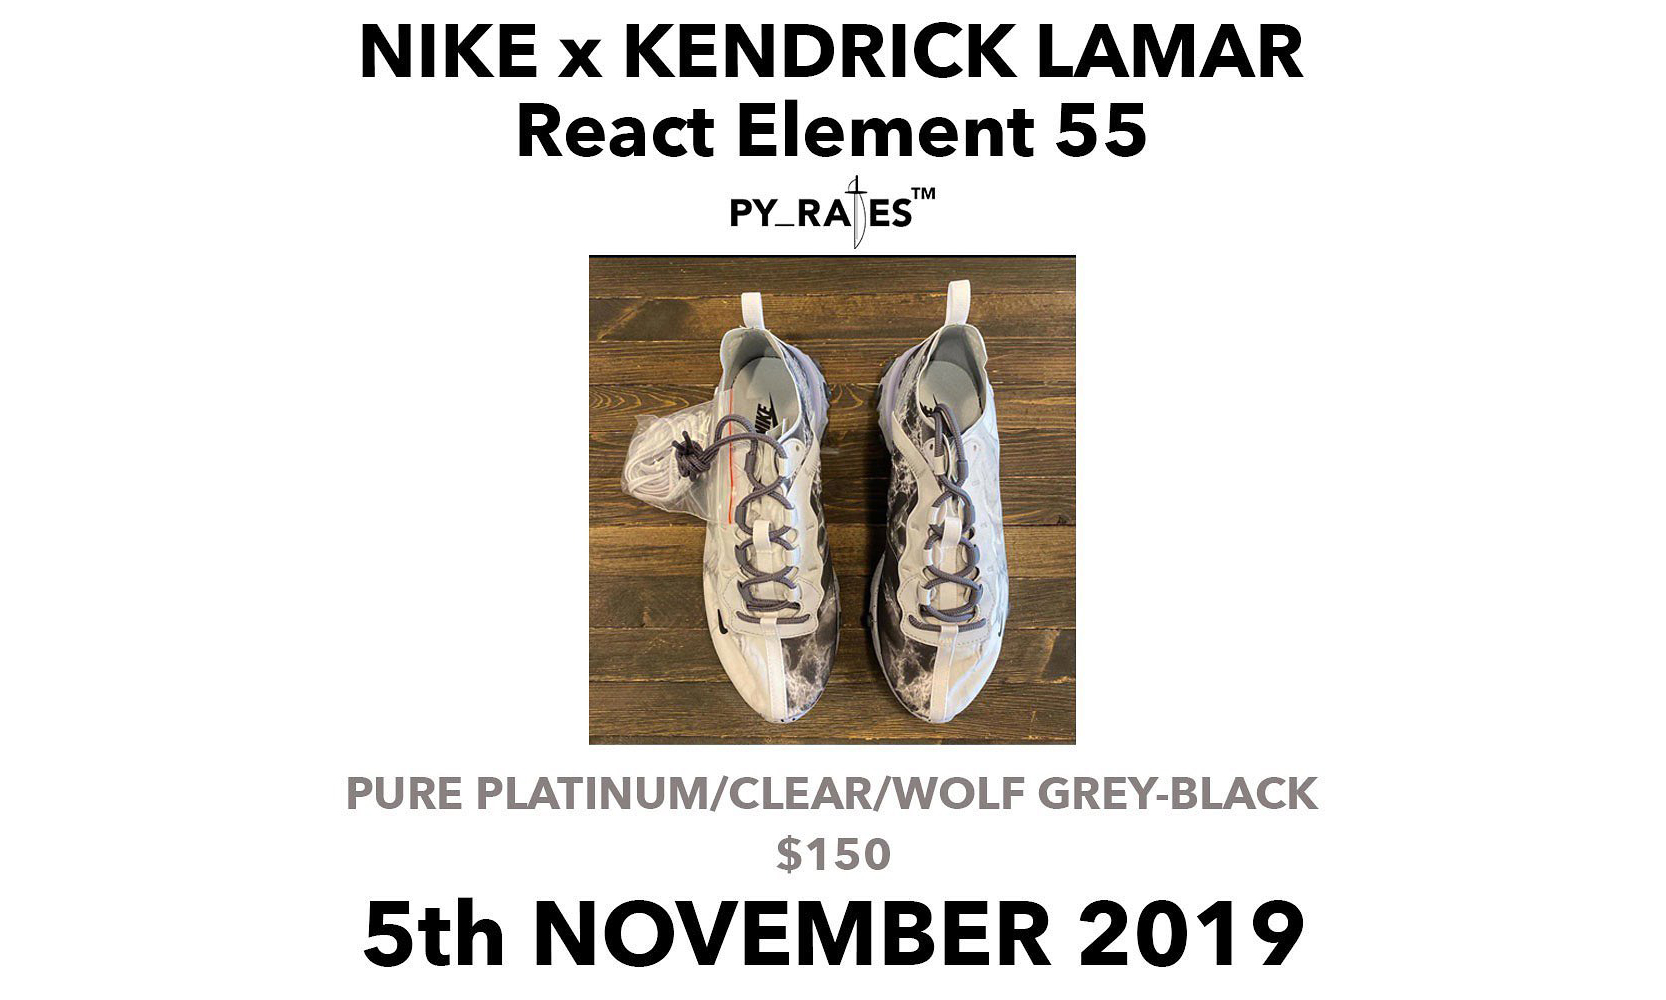 Kendrick Lamar x Nike React Element 55 将于 11 月 5 日发售